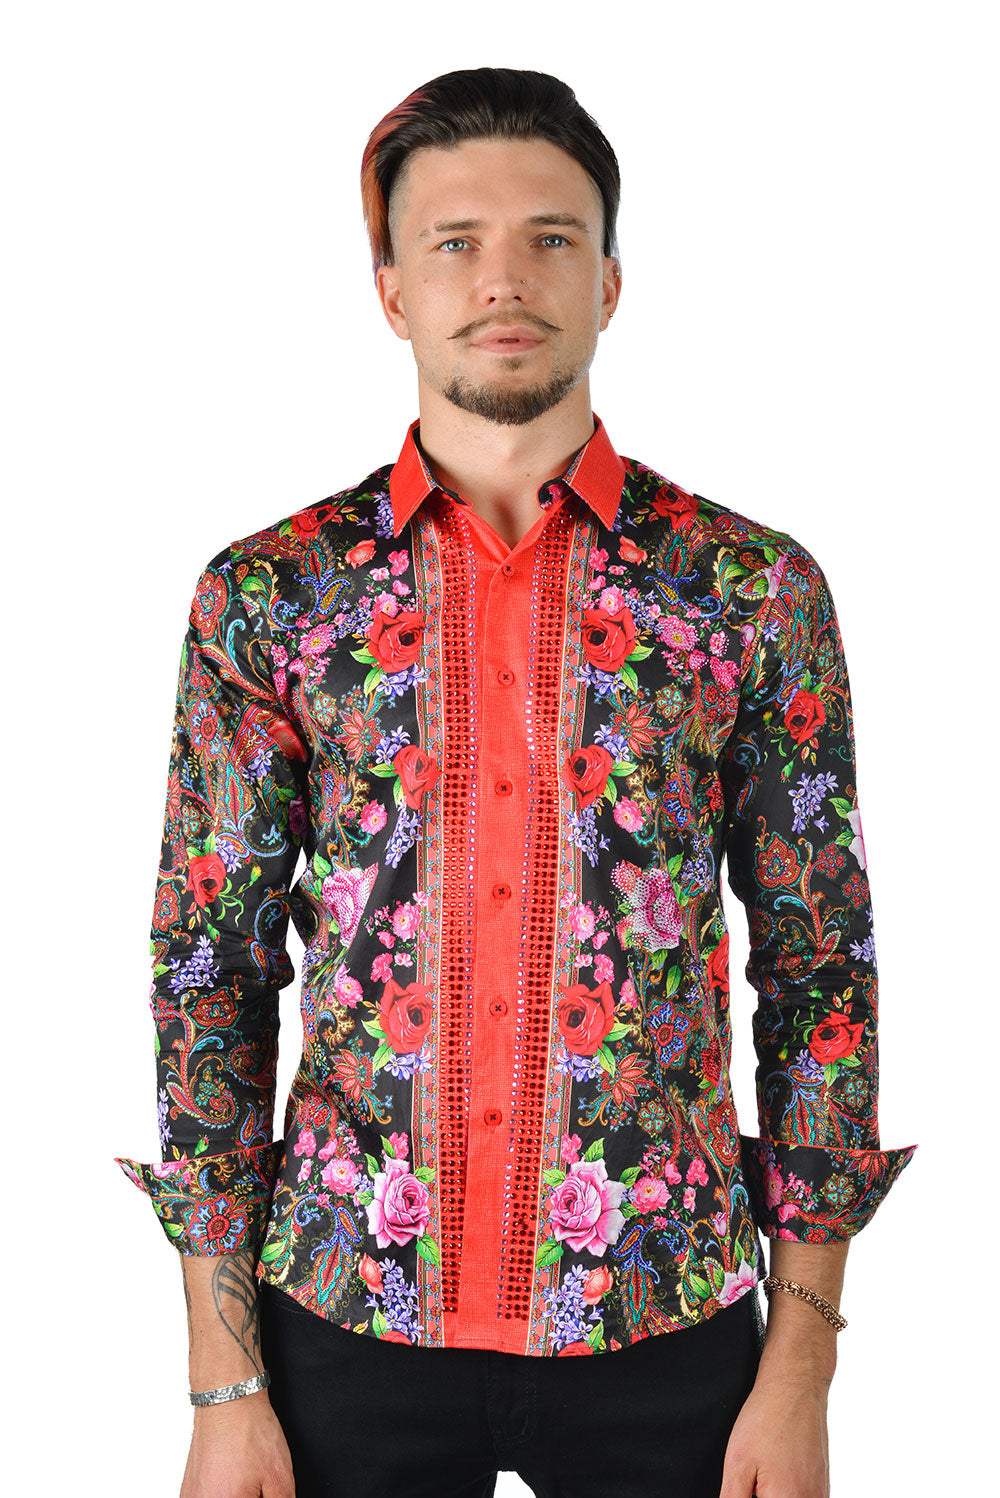 BARABAS Men's Rhinestone Floral Baroque Long Sleeve Shirt SPR07 Black